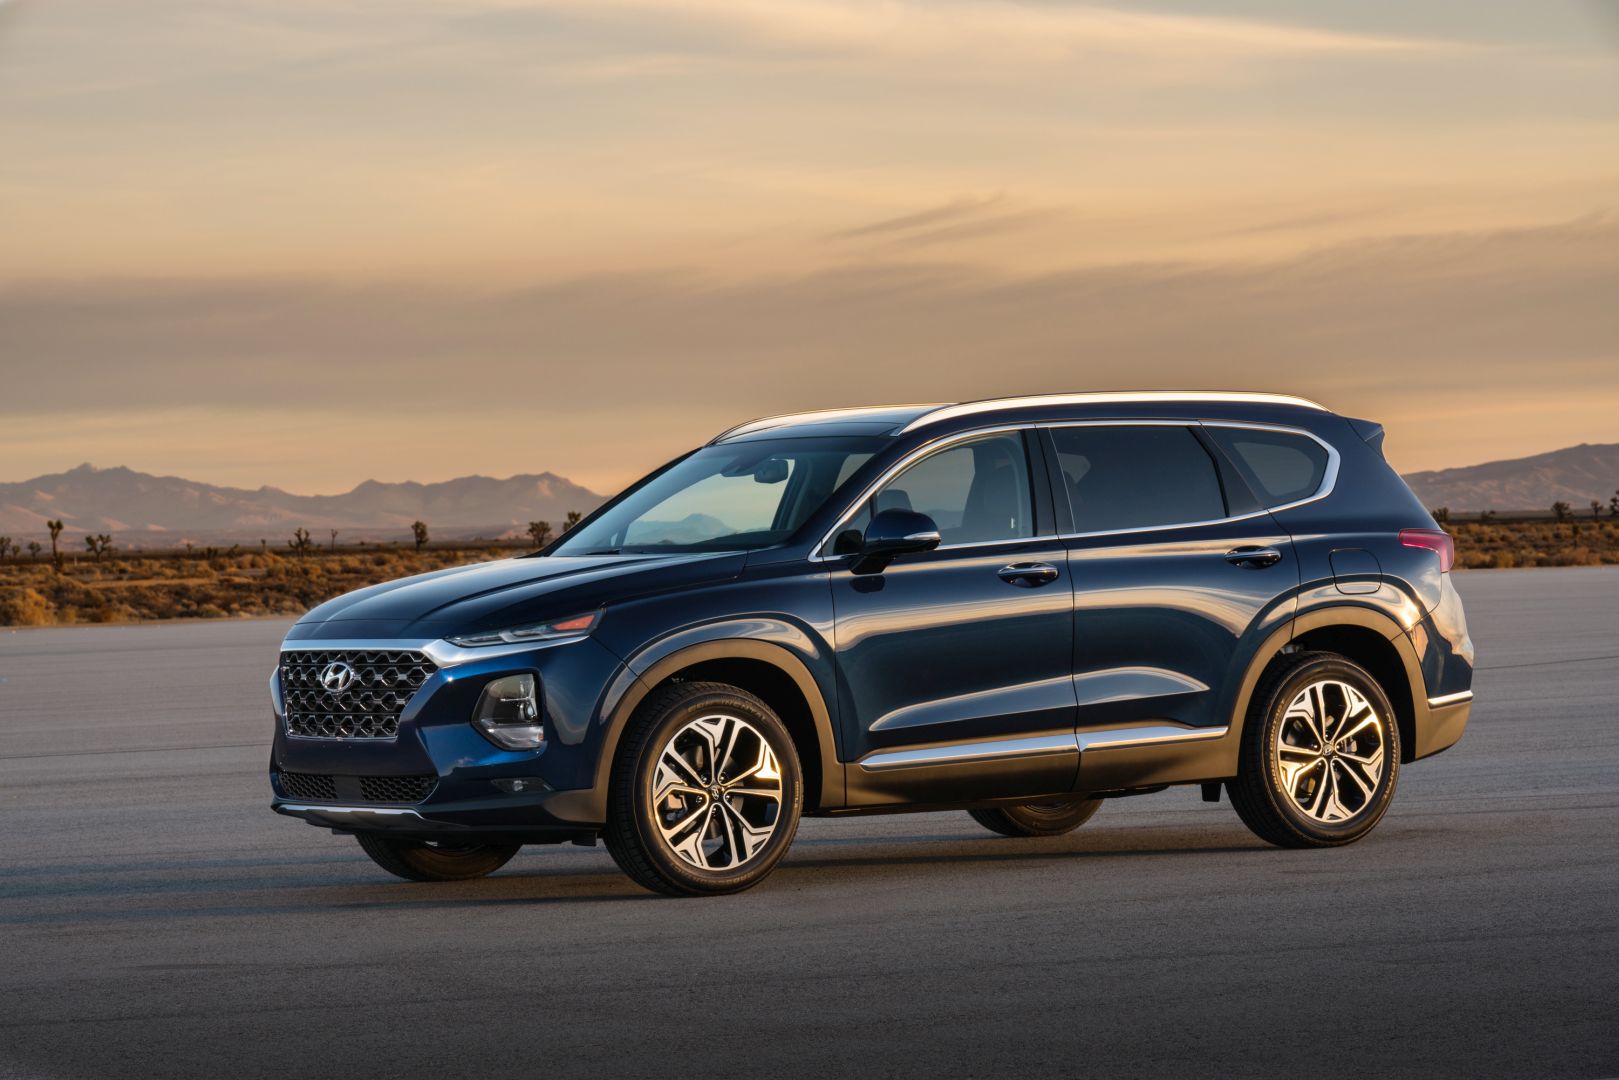 2019 Hyundai Santa Fe Specs & Photos - autoevolution